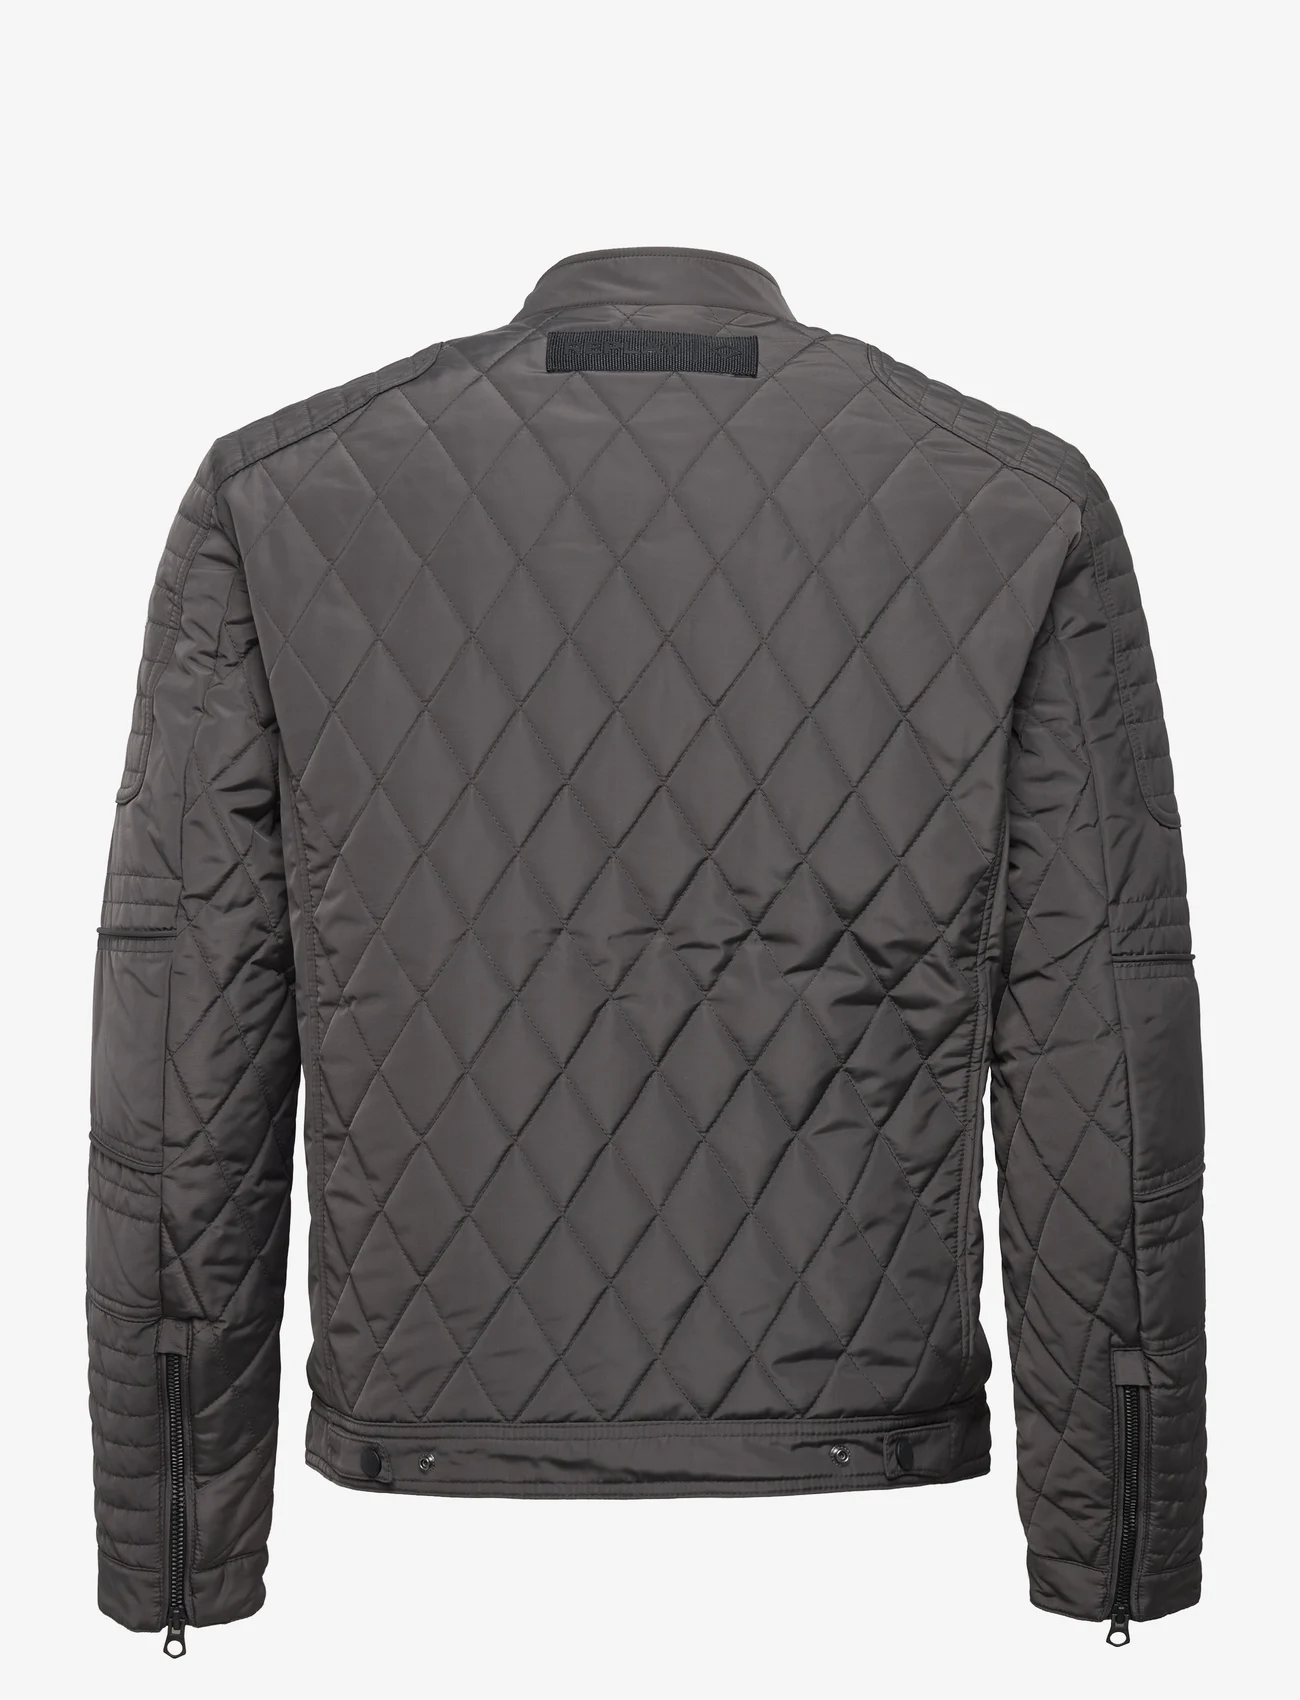 Replay - Jacket - spring jackets - grey - 1